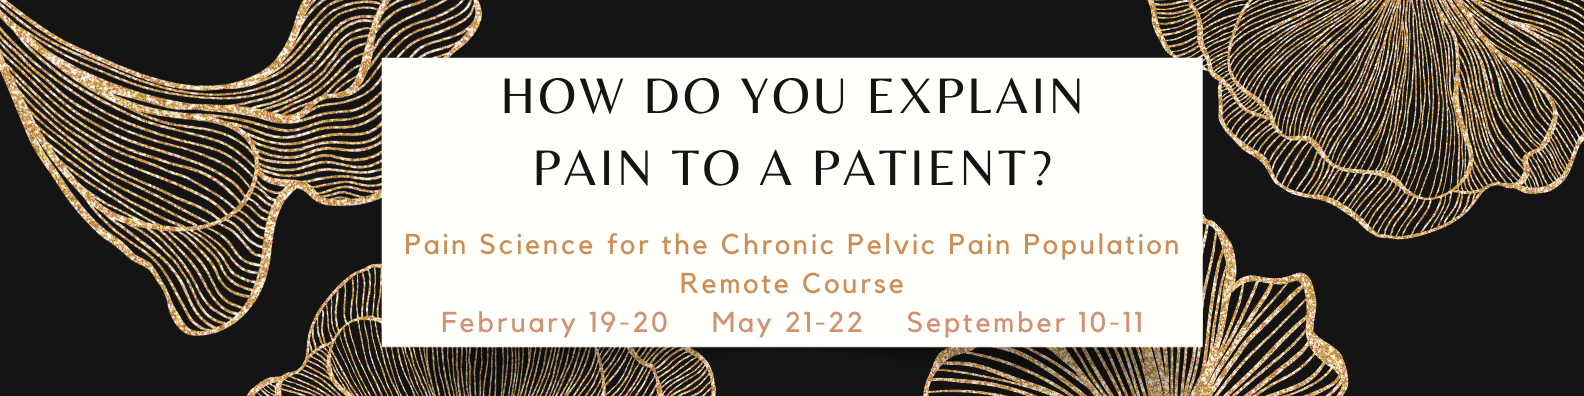 How do you explain pain to a patient?